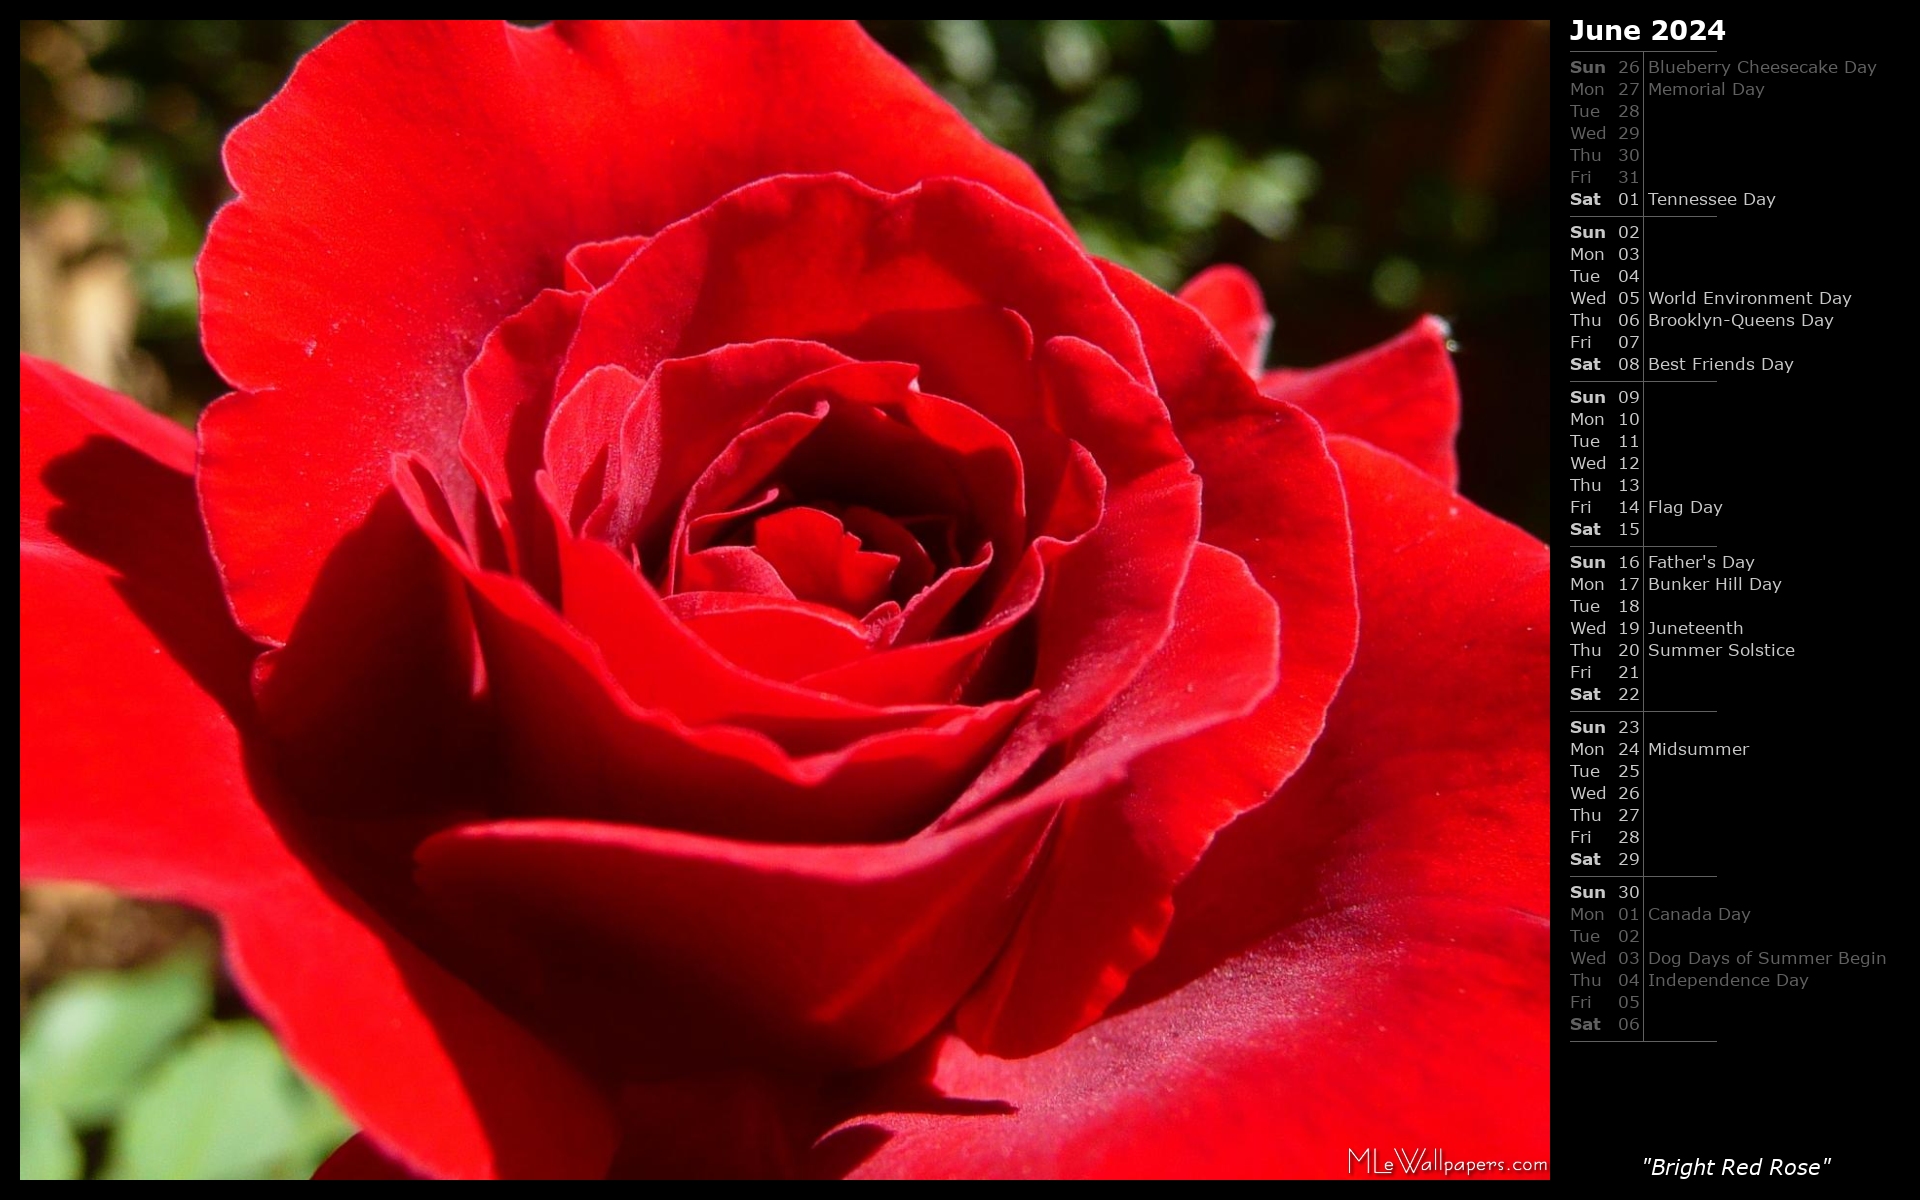 MLeWallpapers.com - Bright Red Rose (Calendar)